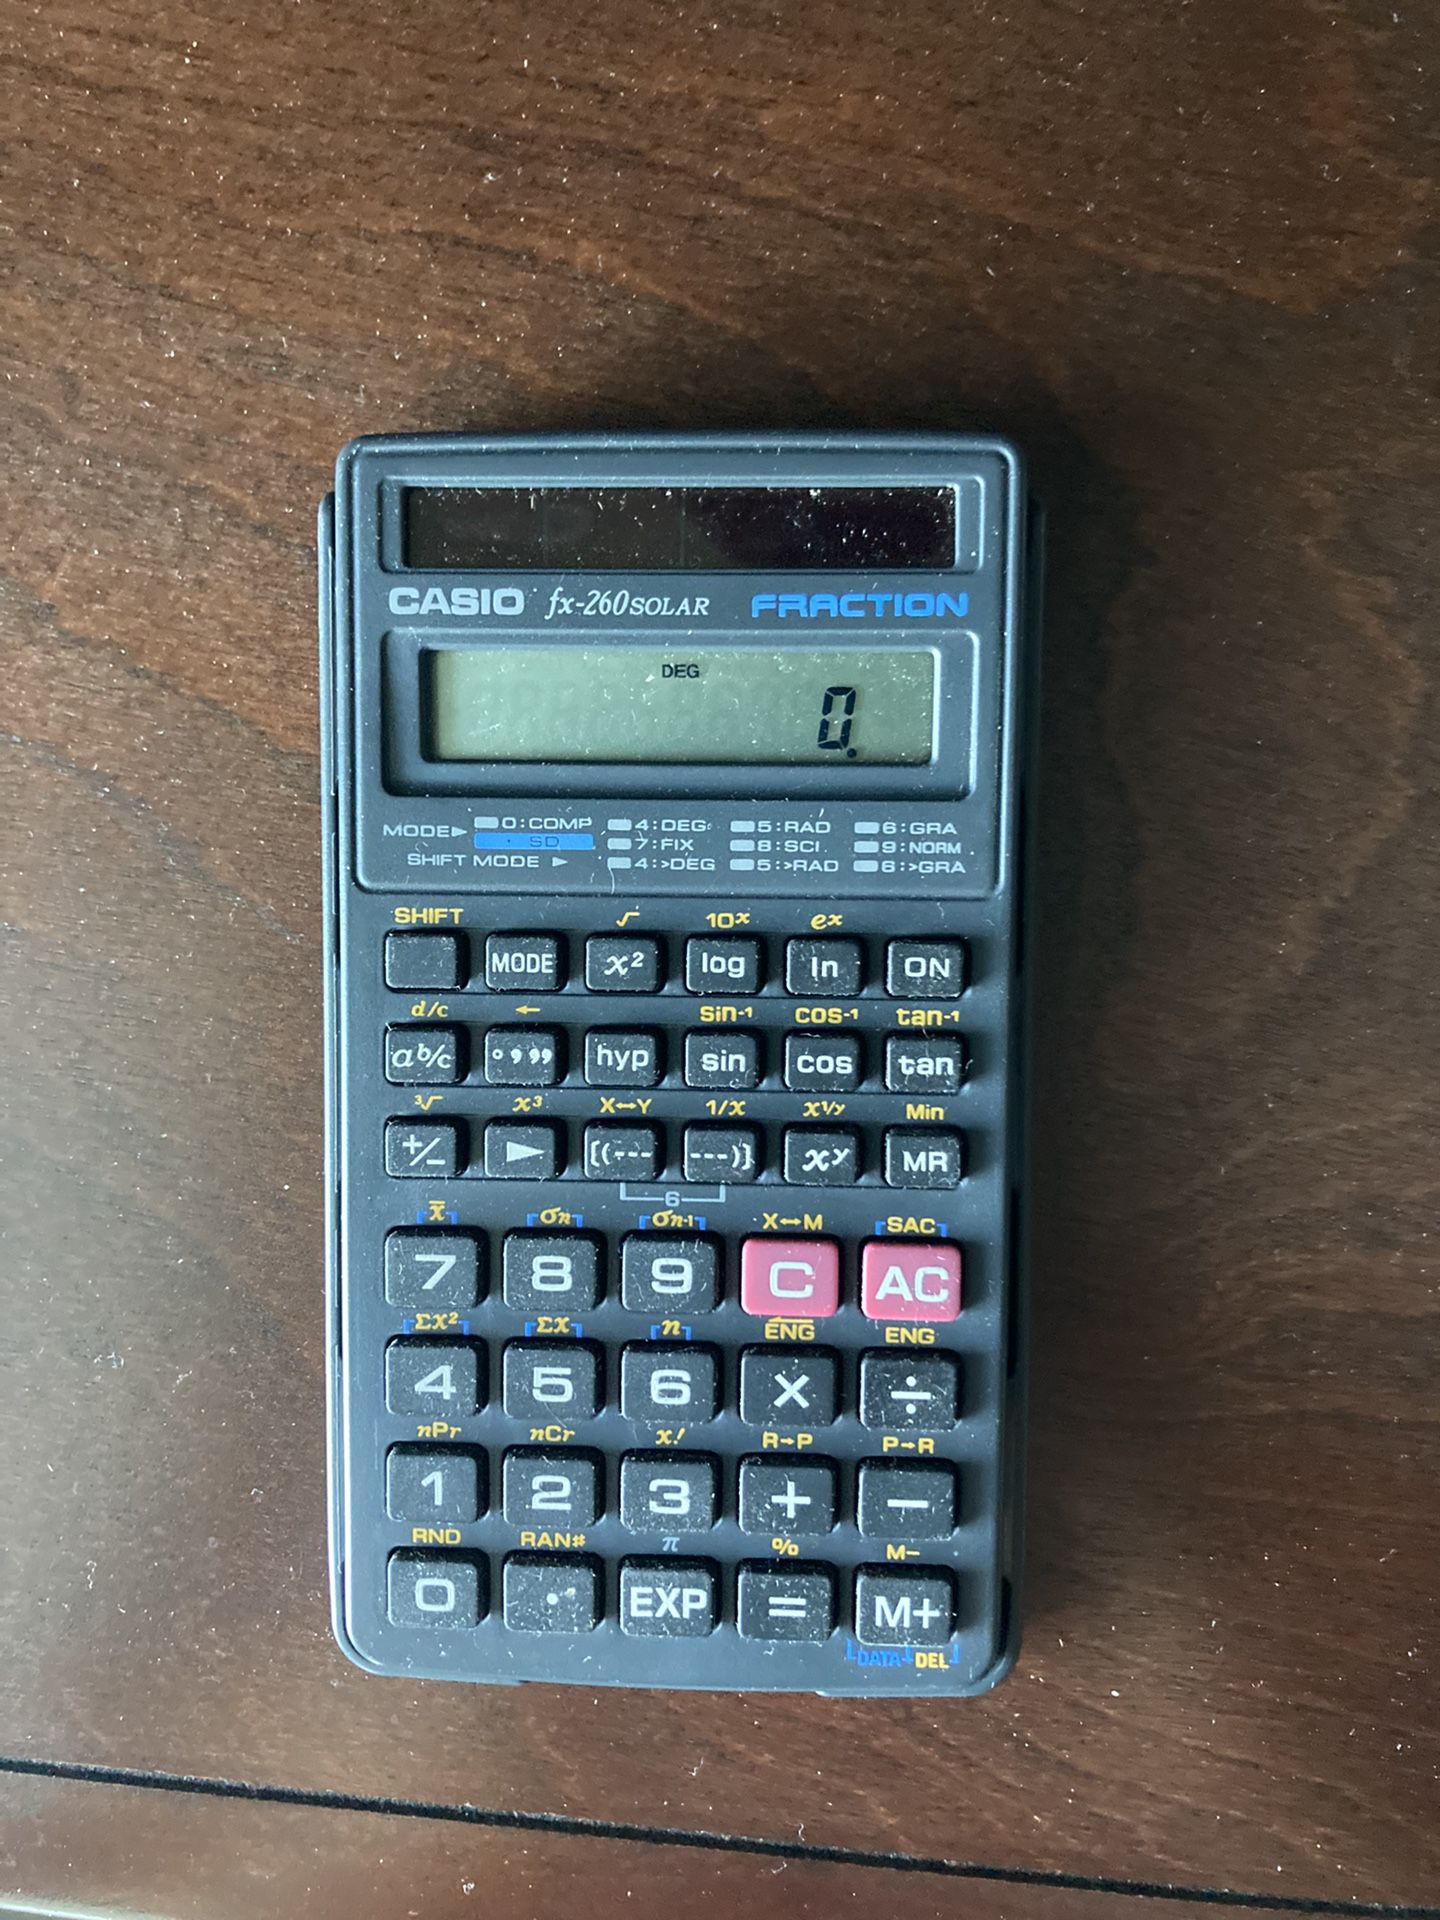 Casio Fx-260 solar Fraction calculator 